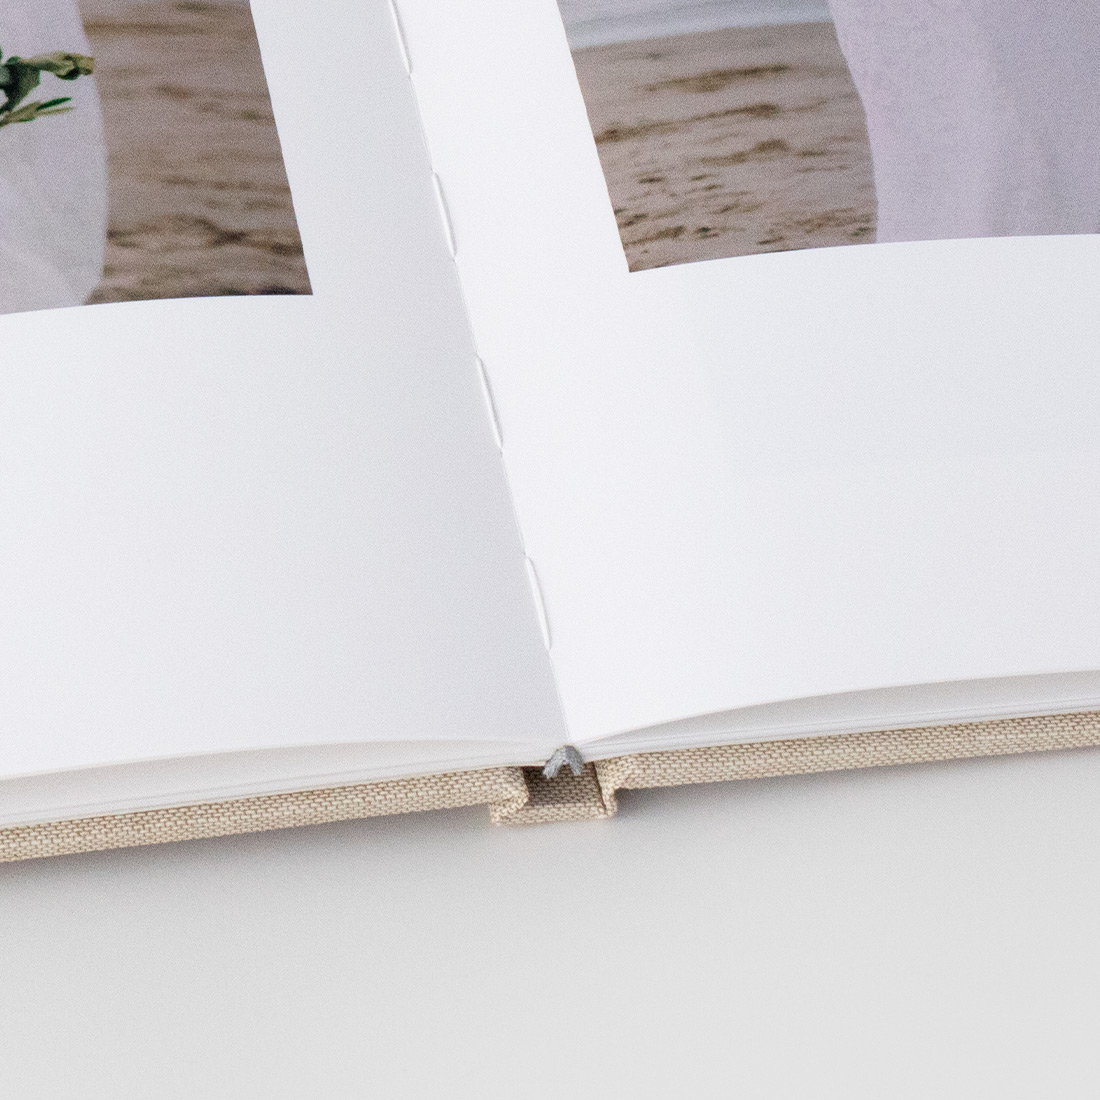 Premium photo book stitched spine